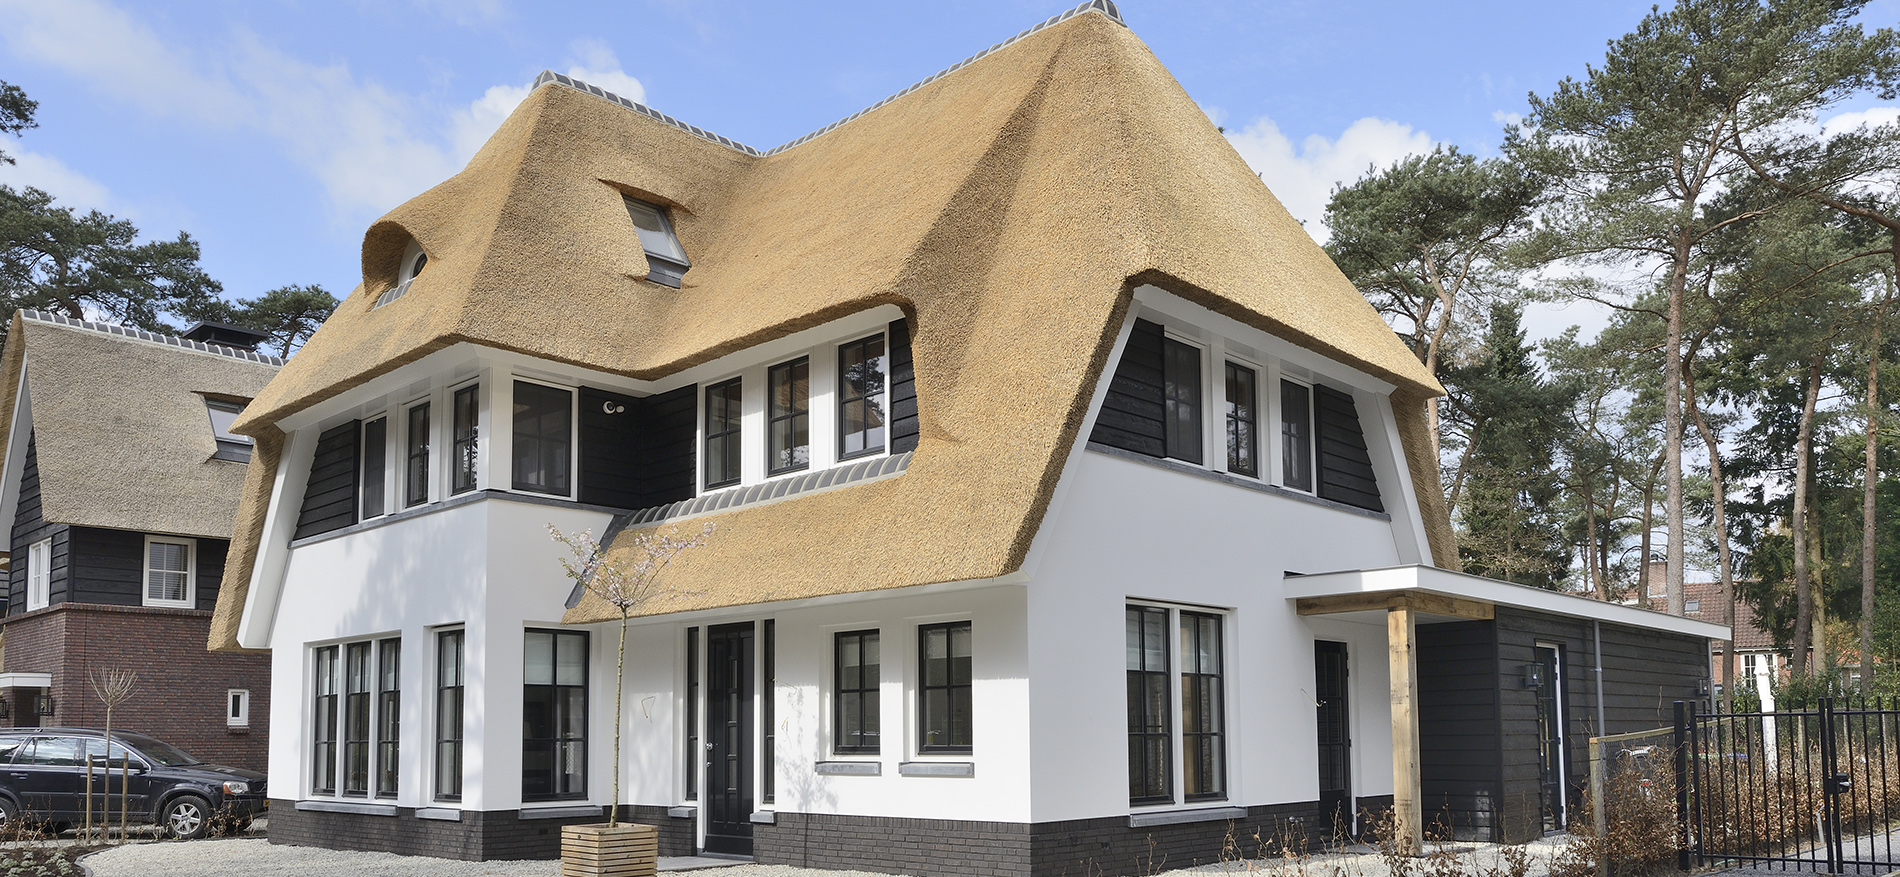 Home in Zeist Kerkebosch - Tailor-made villa's